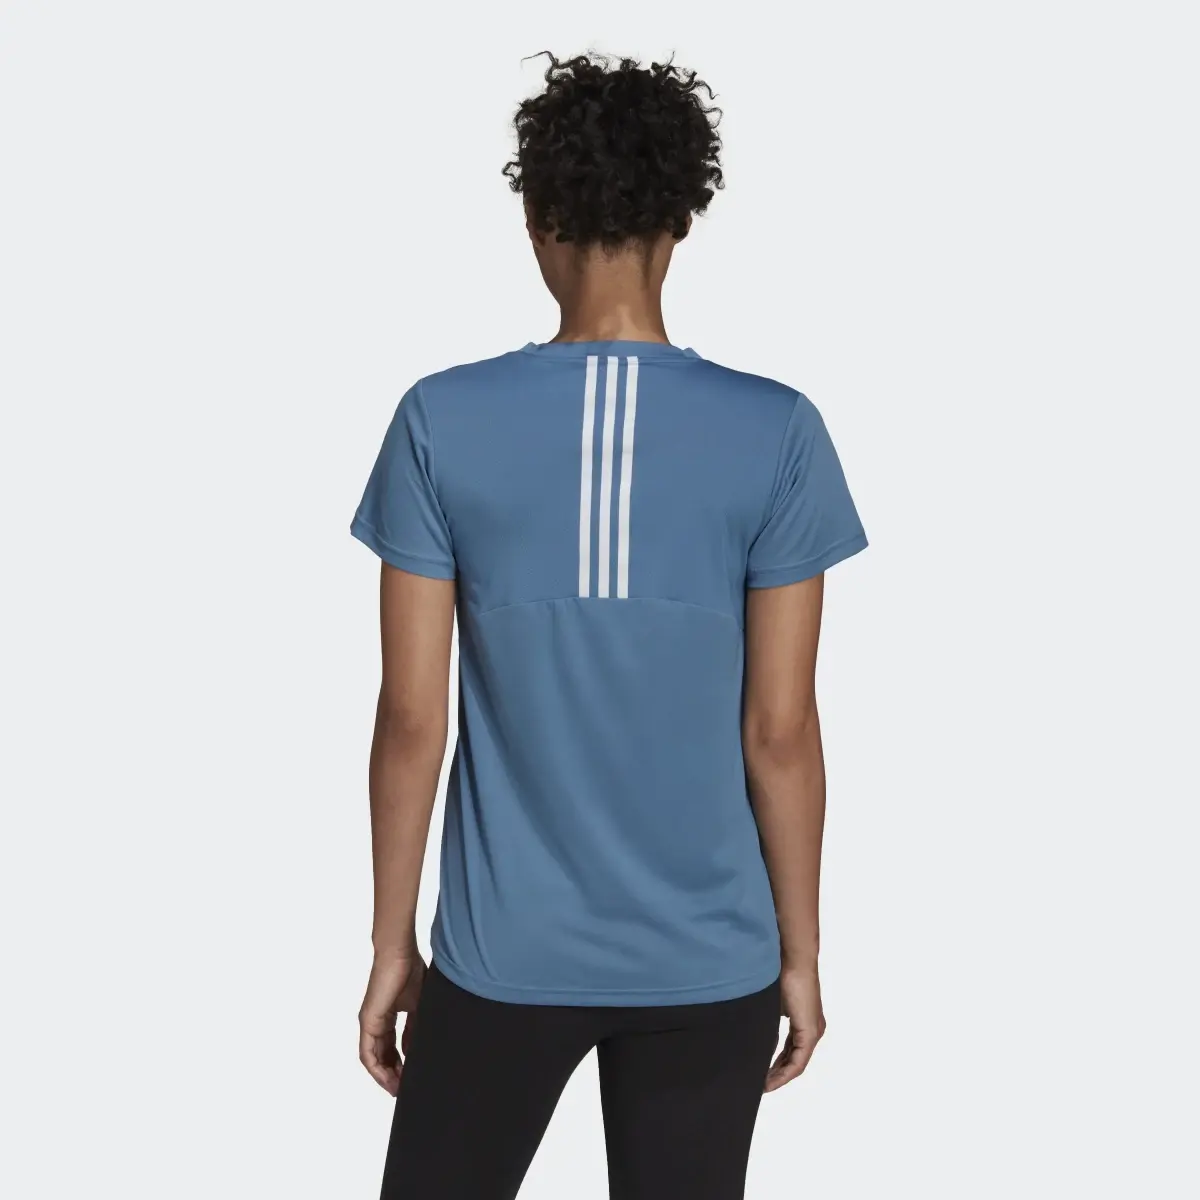 Adidas T-shirt AEROREADY Designed 2 Move 3-Stripes Sport. 3